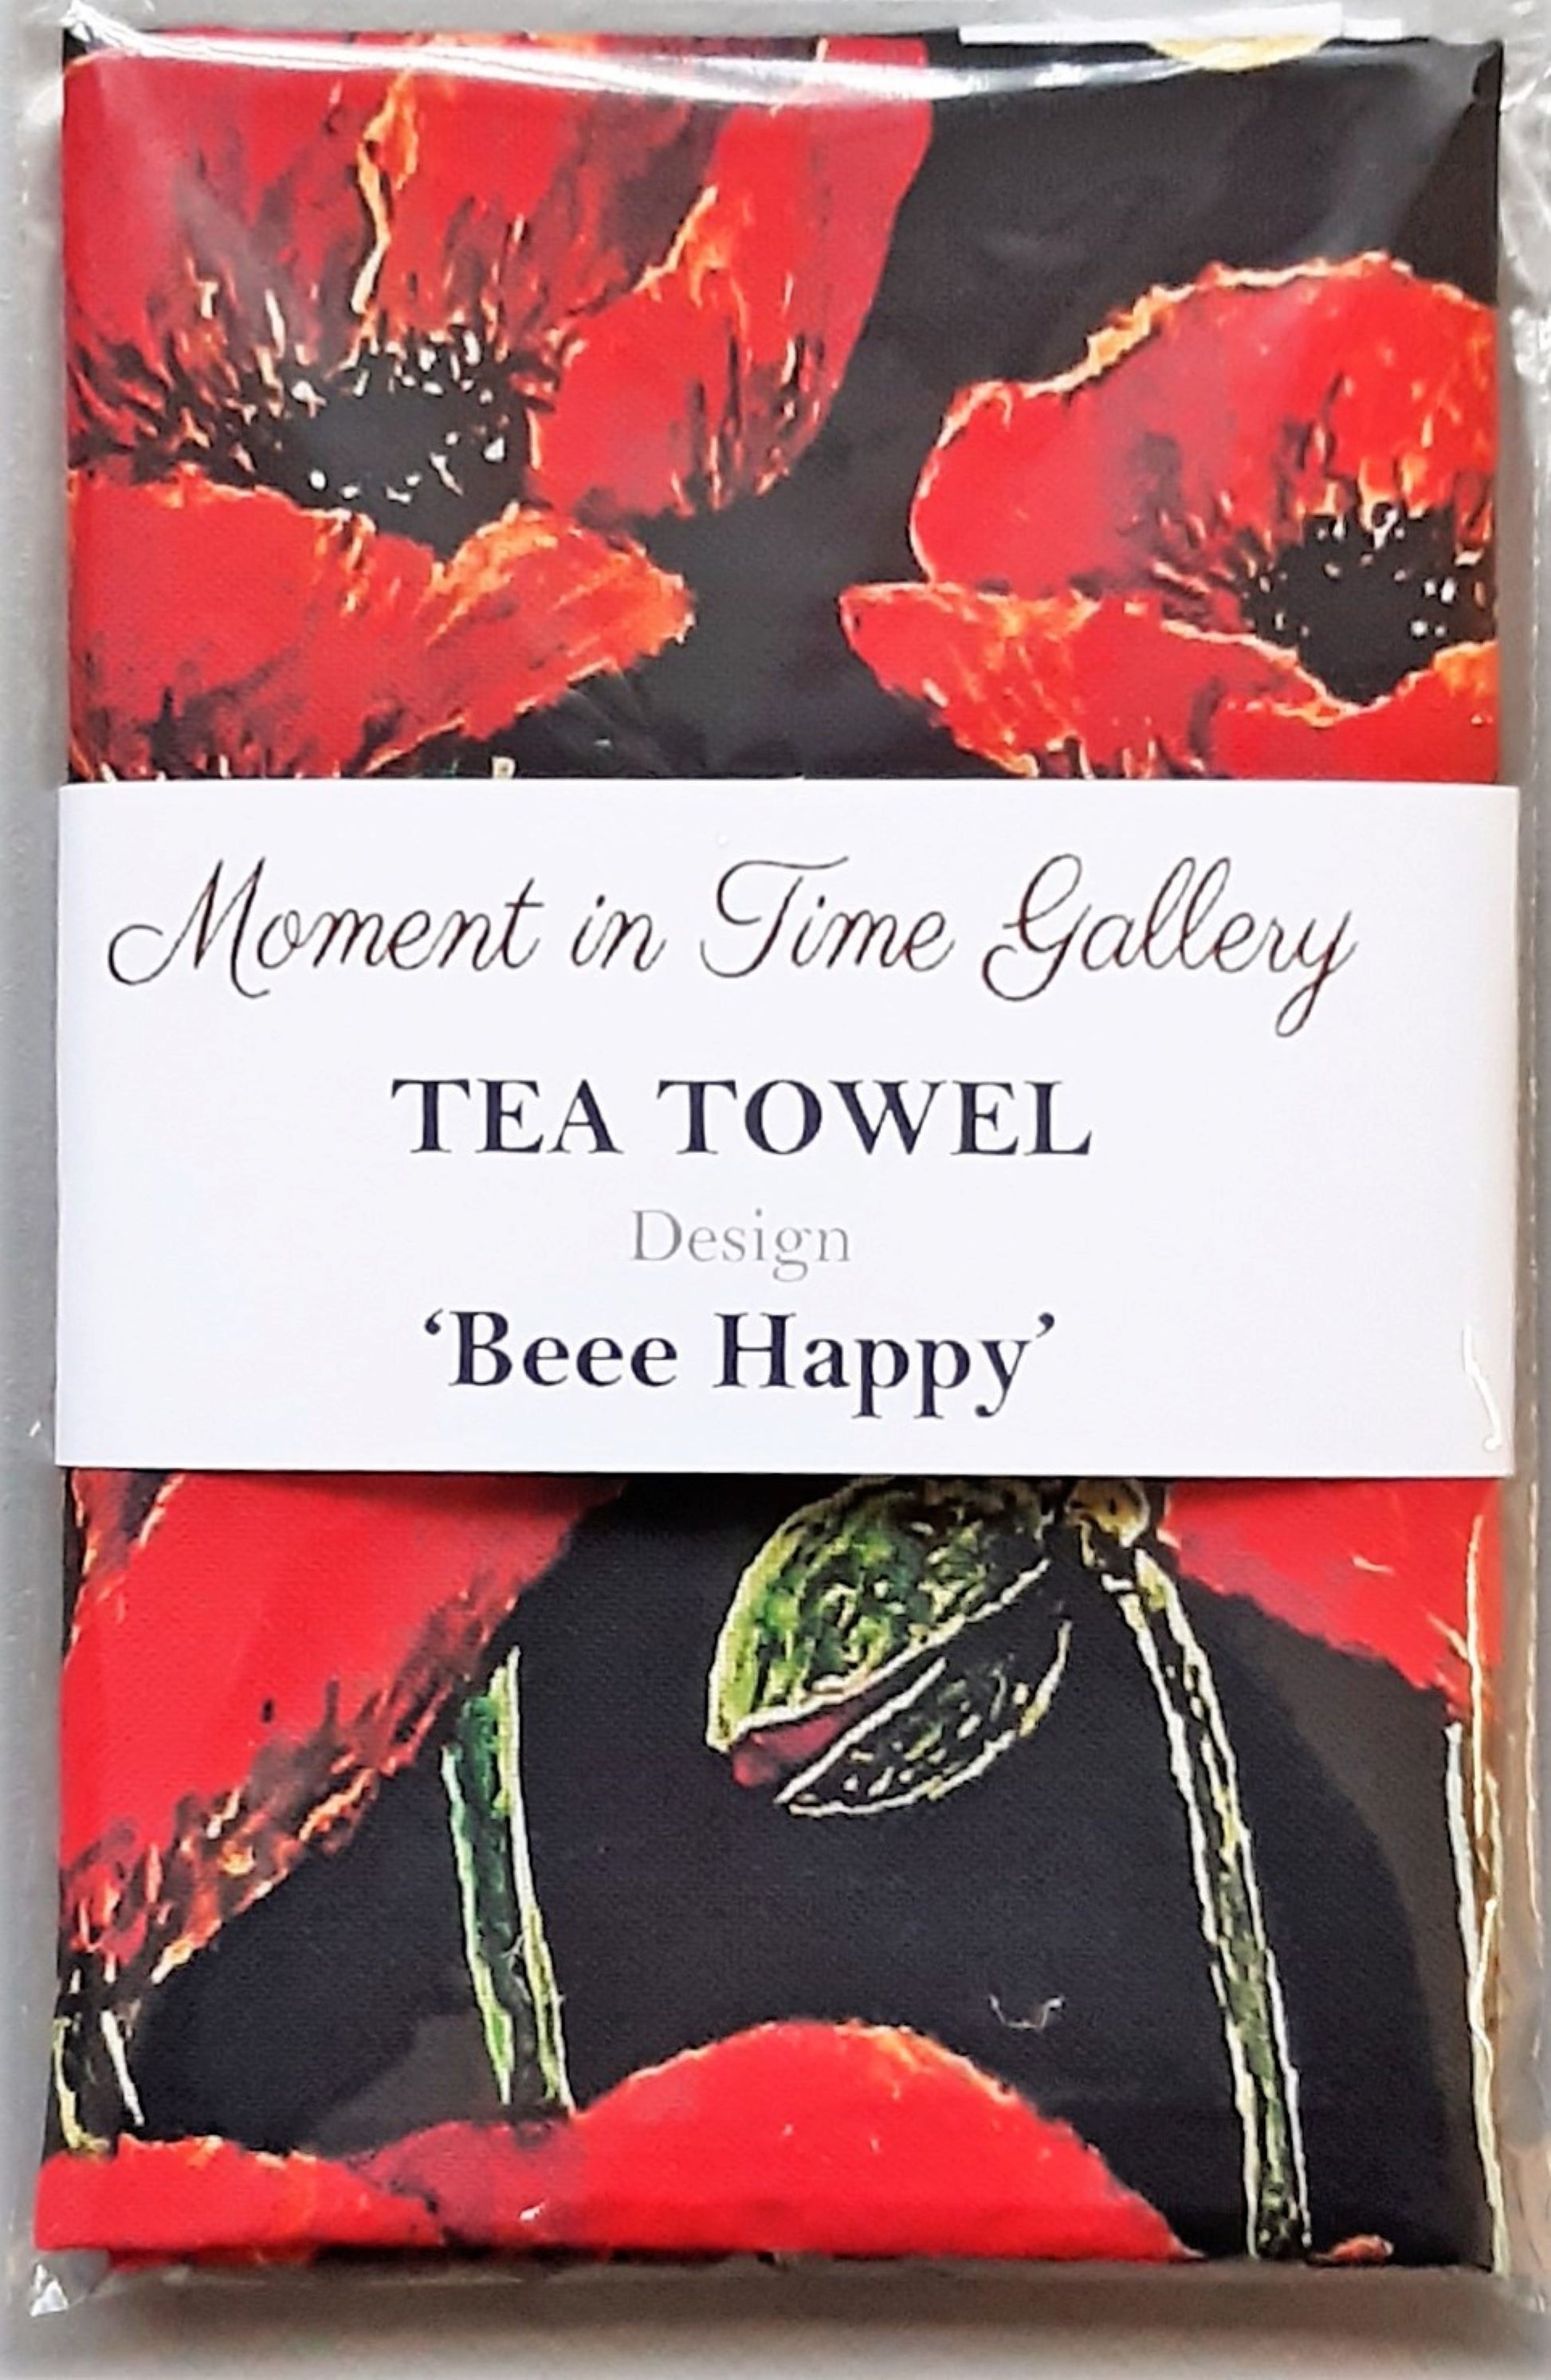 Tea towel front packaging view. MTGT-0001